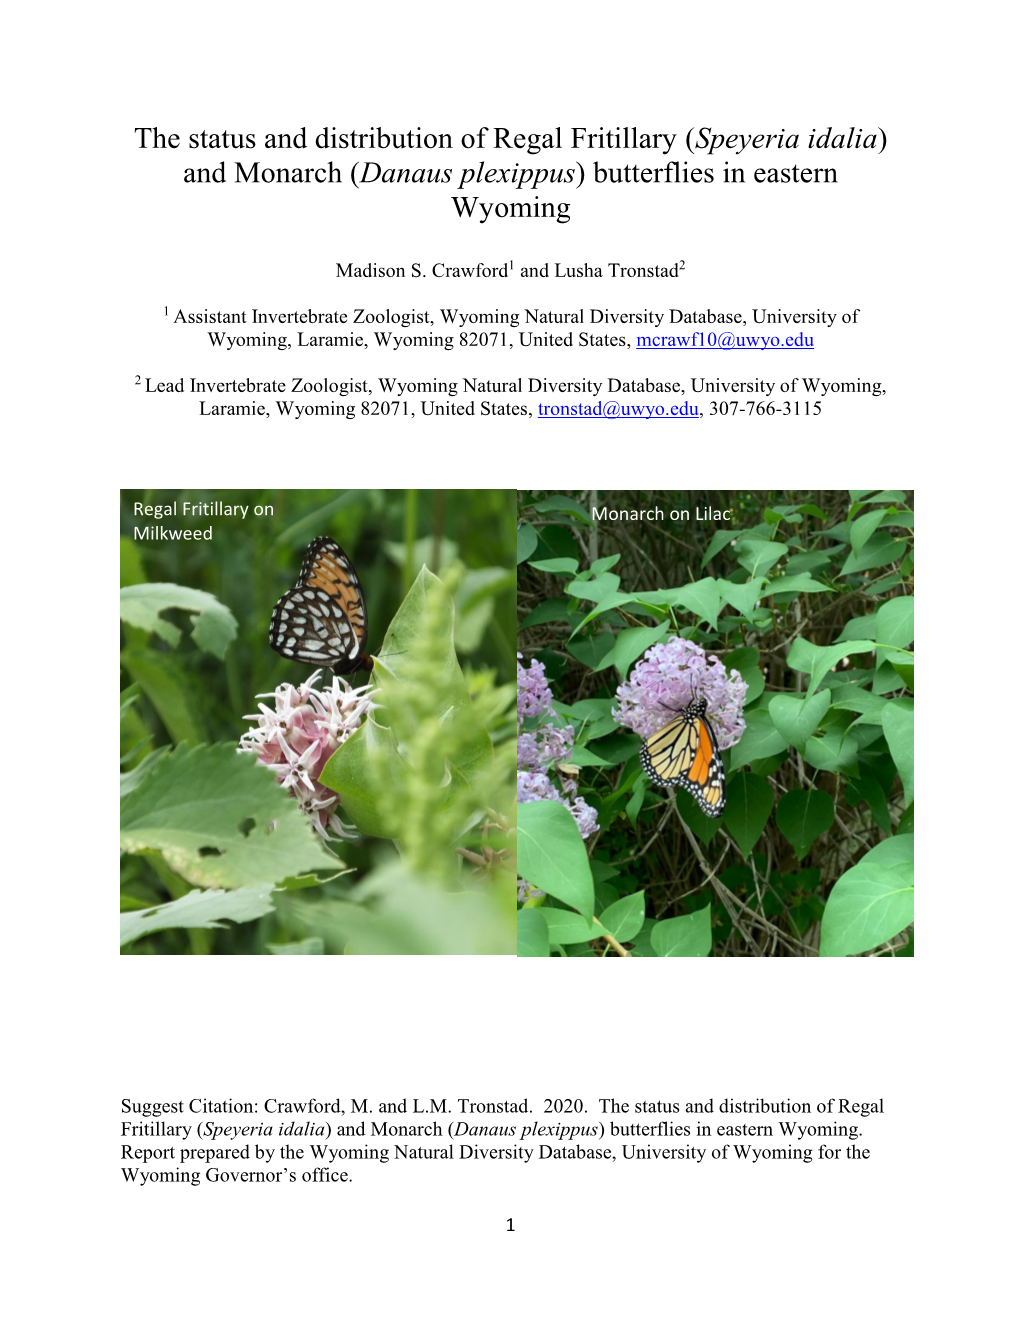 The Status and Distribution of Regal Fritillary (Speyeria Idalia) and Monarch (Danaus Plexippus) Butterflies in Eastern Wyoming